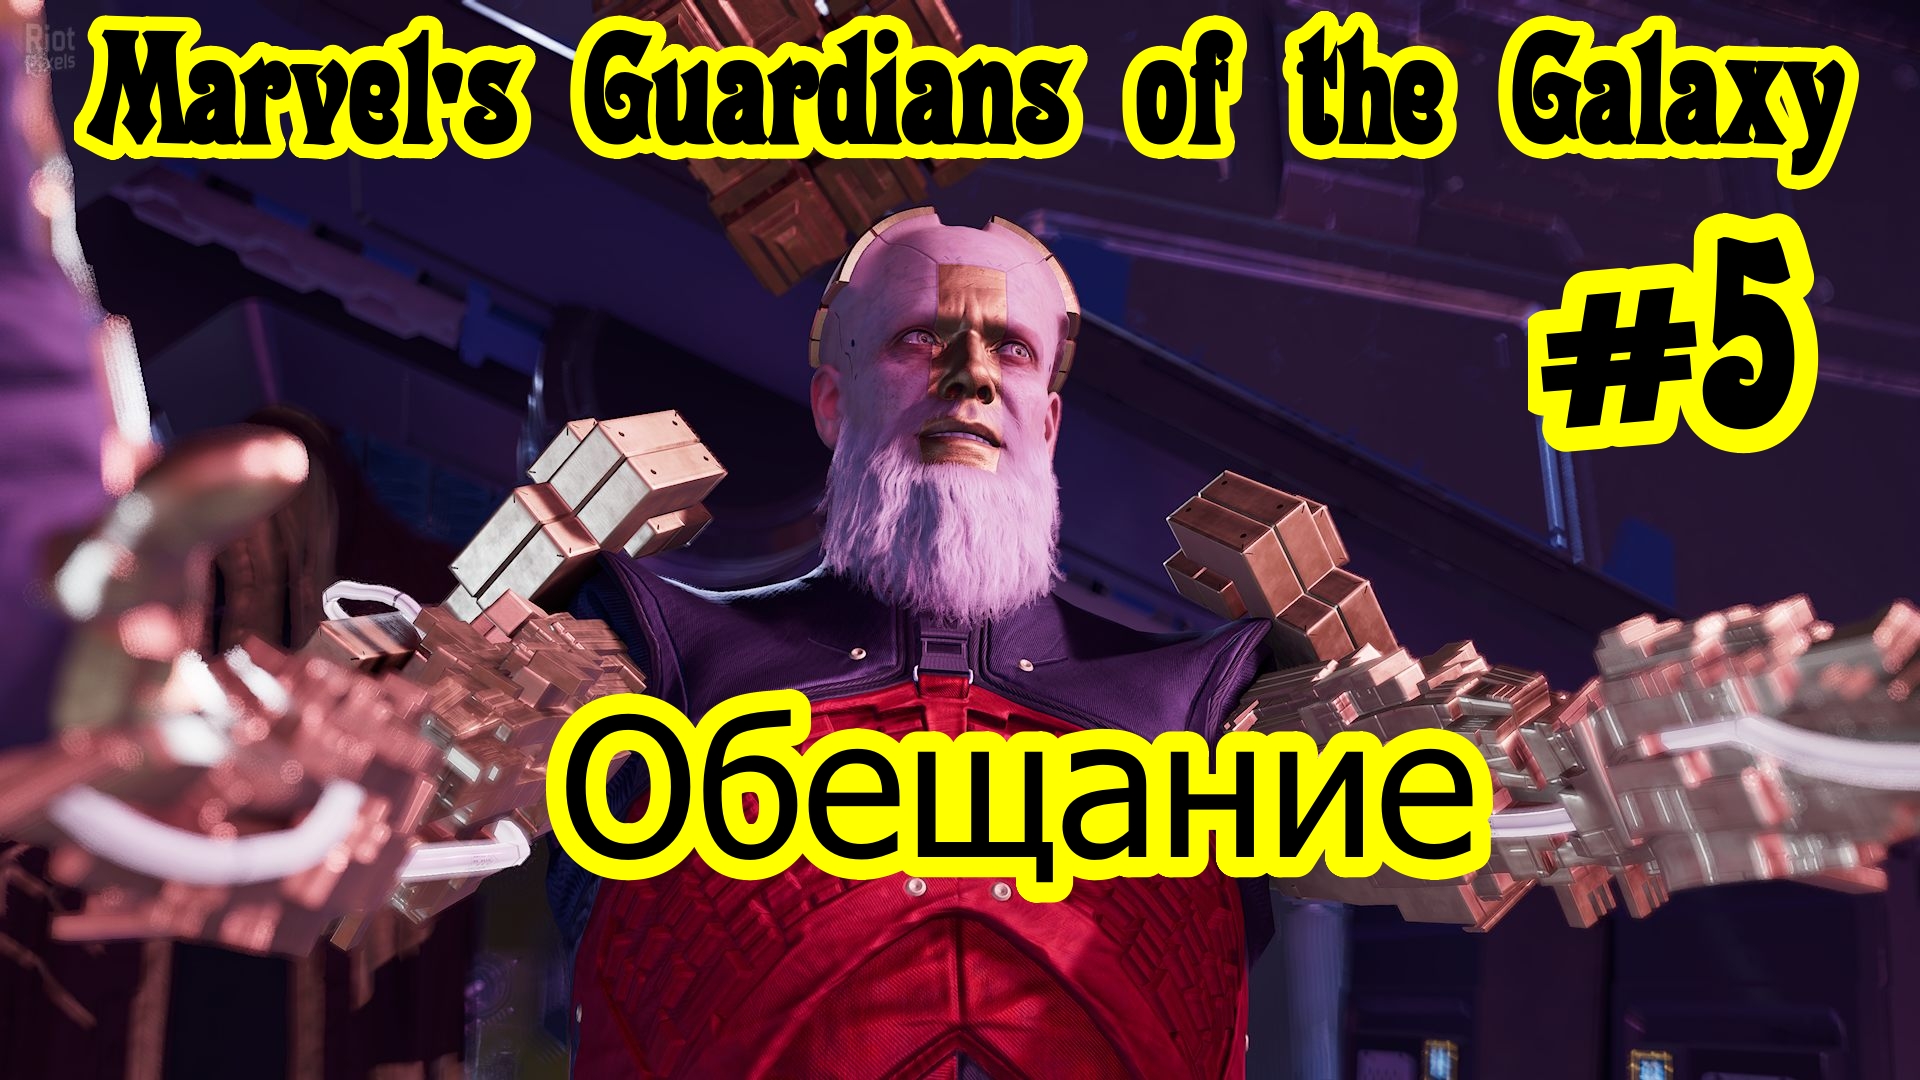 Marvel's Guardians of the Galaxy Обещание  Без Комментарий Прохождение #5